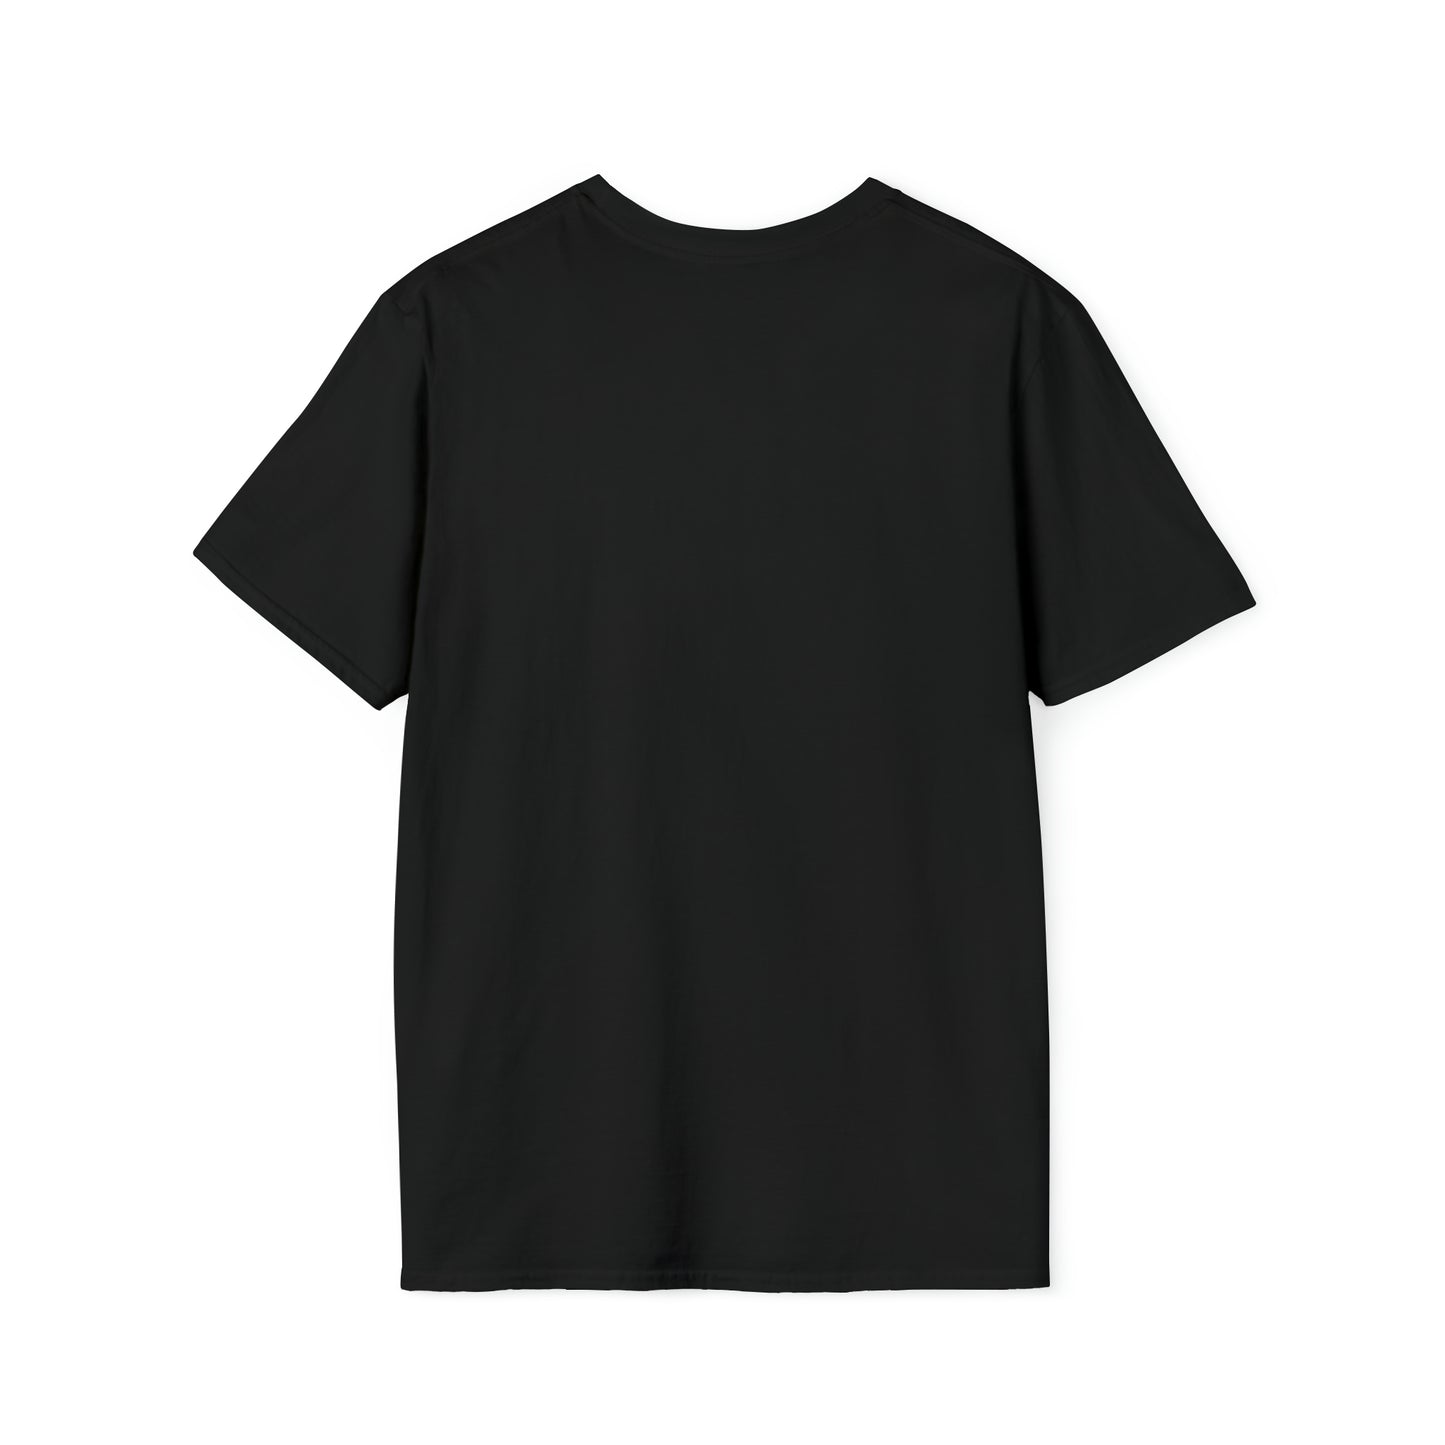 JUST Keep Moving Forward - Unisex Softstyle T-Shirt